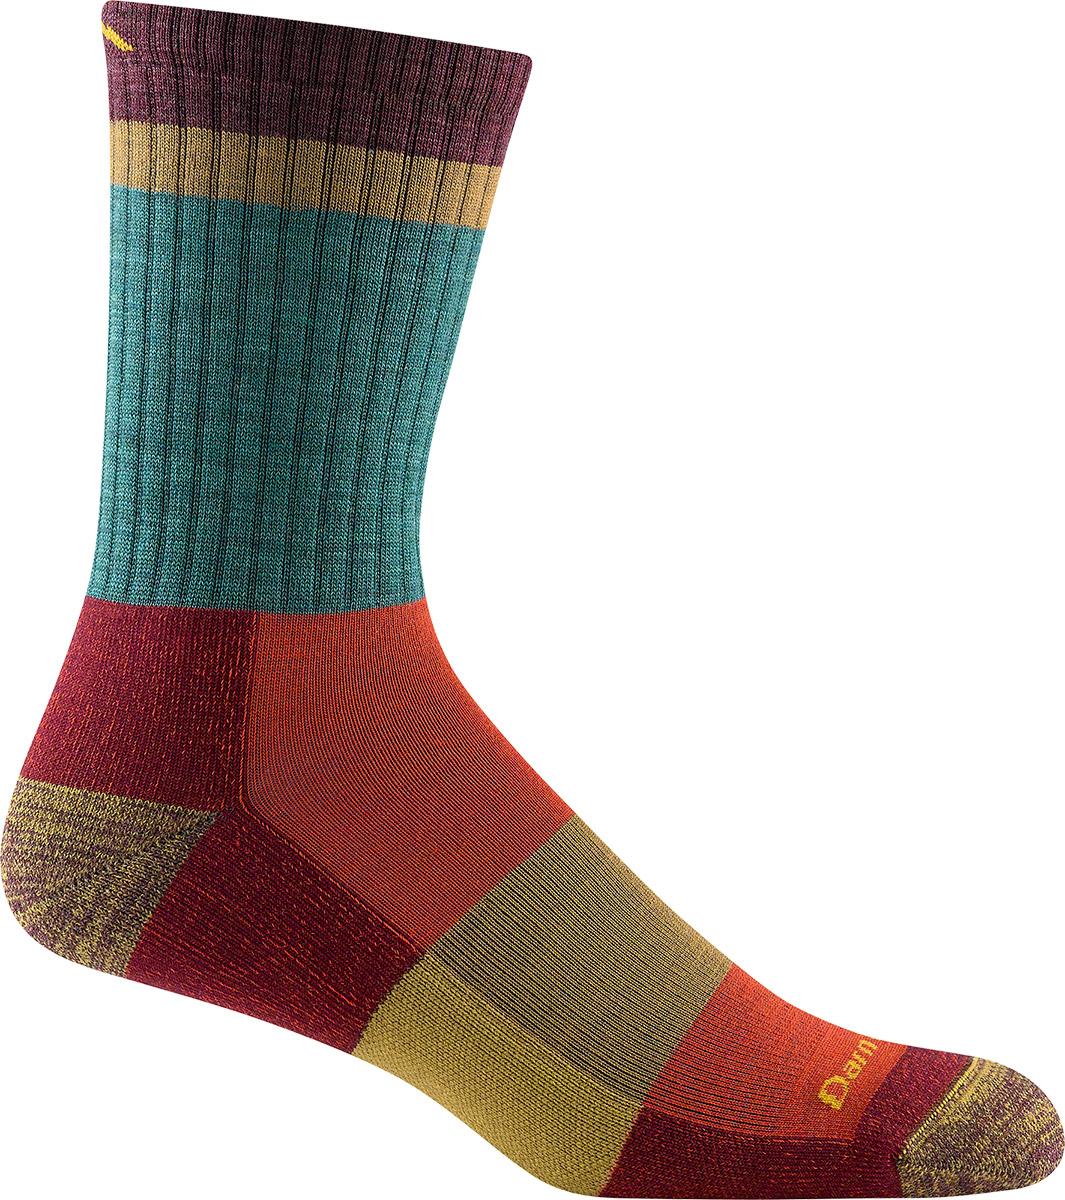 Darn Tough Heady Stripe Socks - Teal